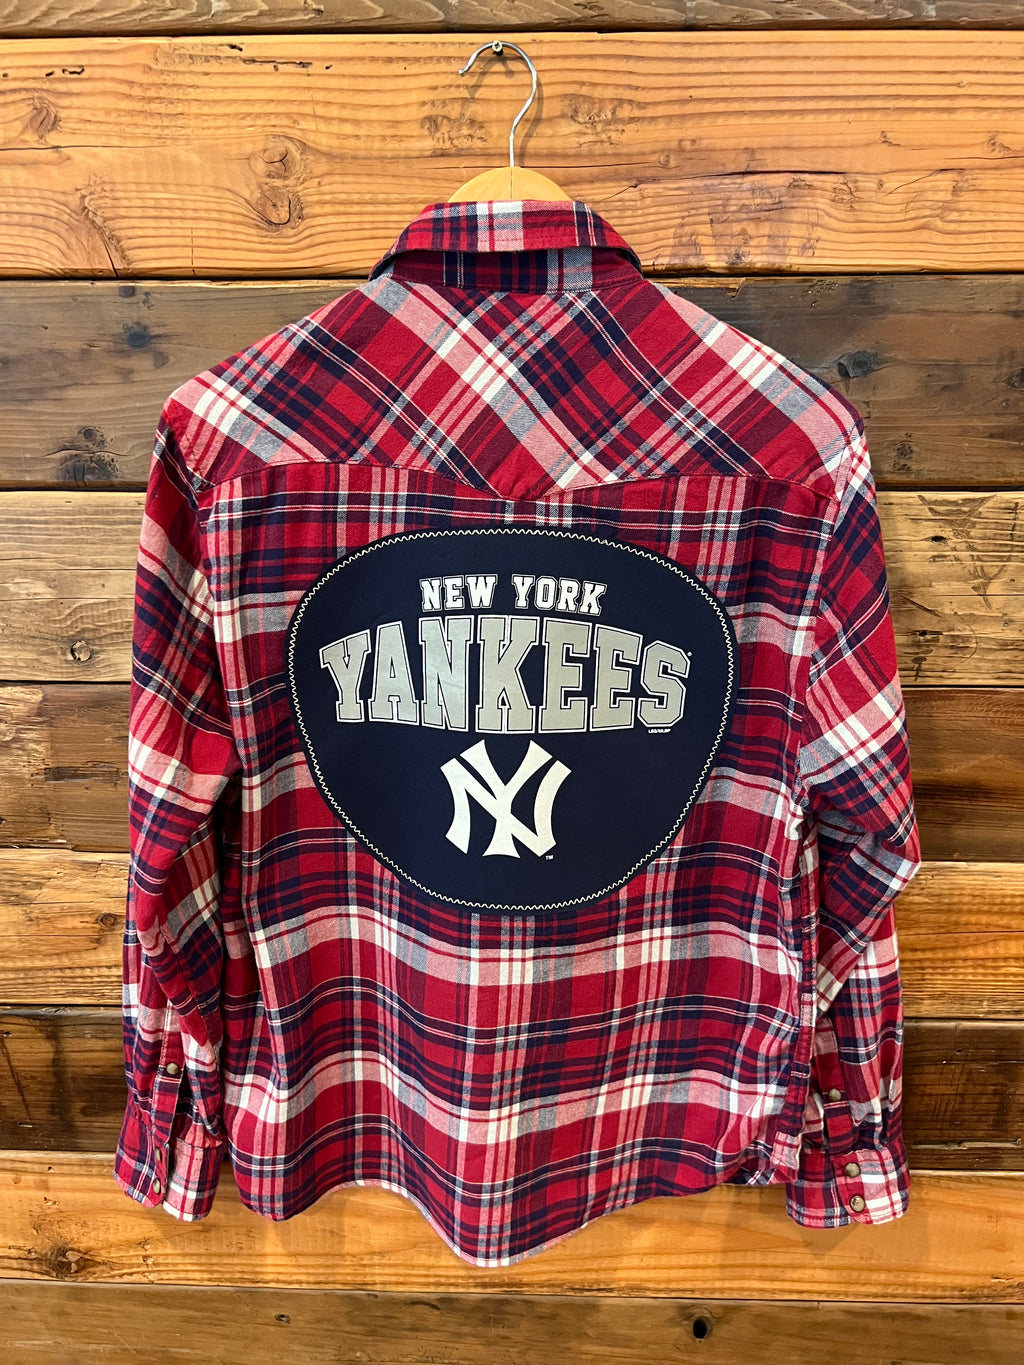 New York Yankees baseball one of a kind custom Jachs Girlfriend vintage flannel